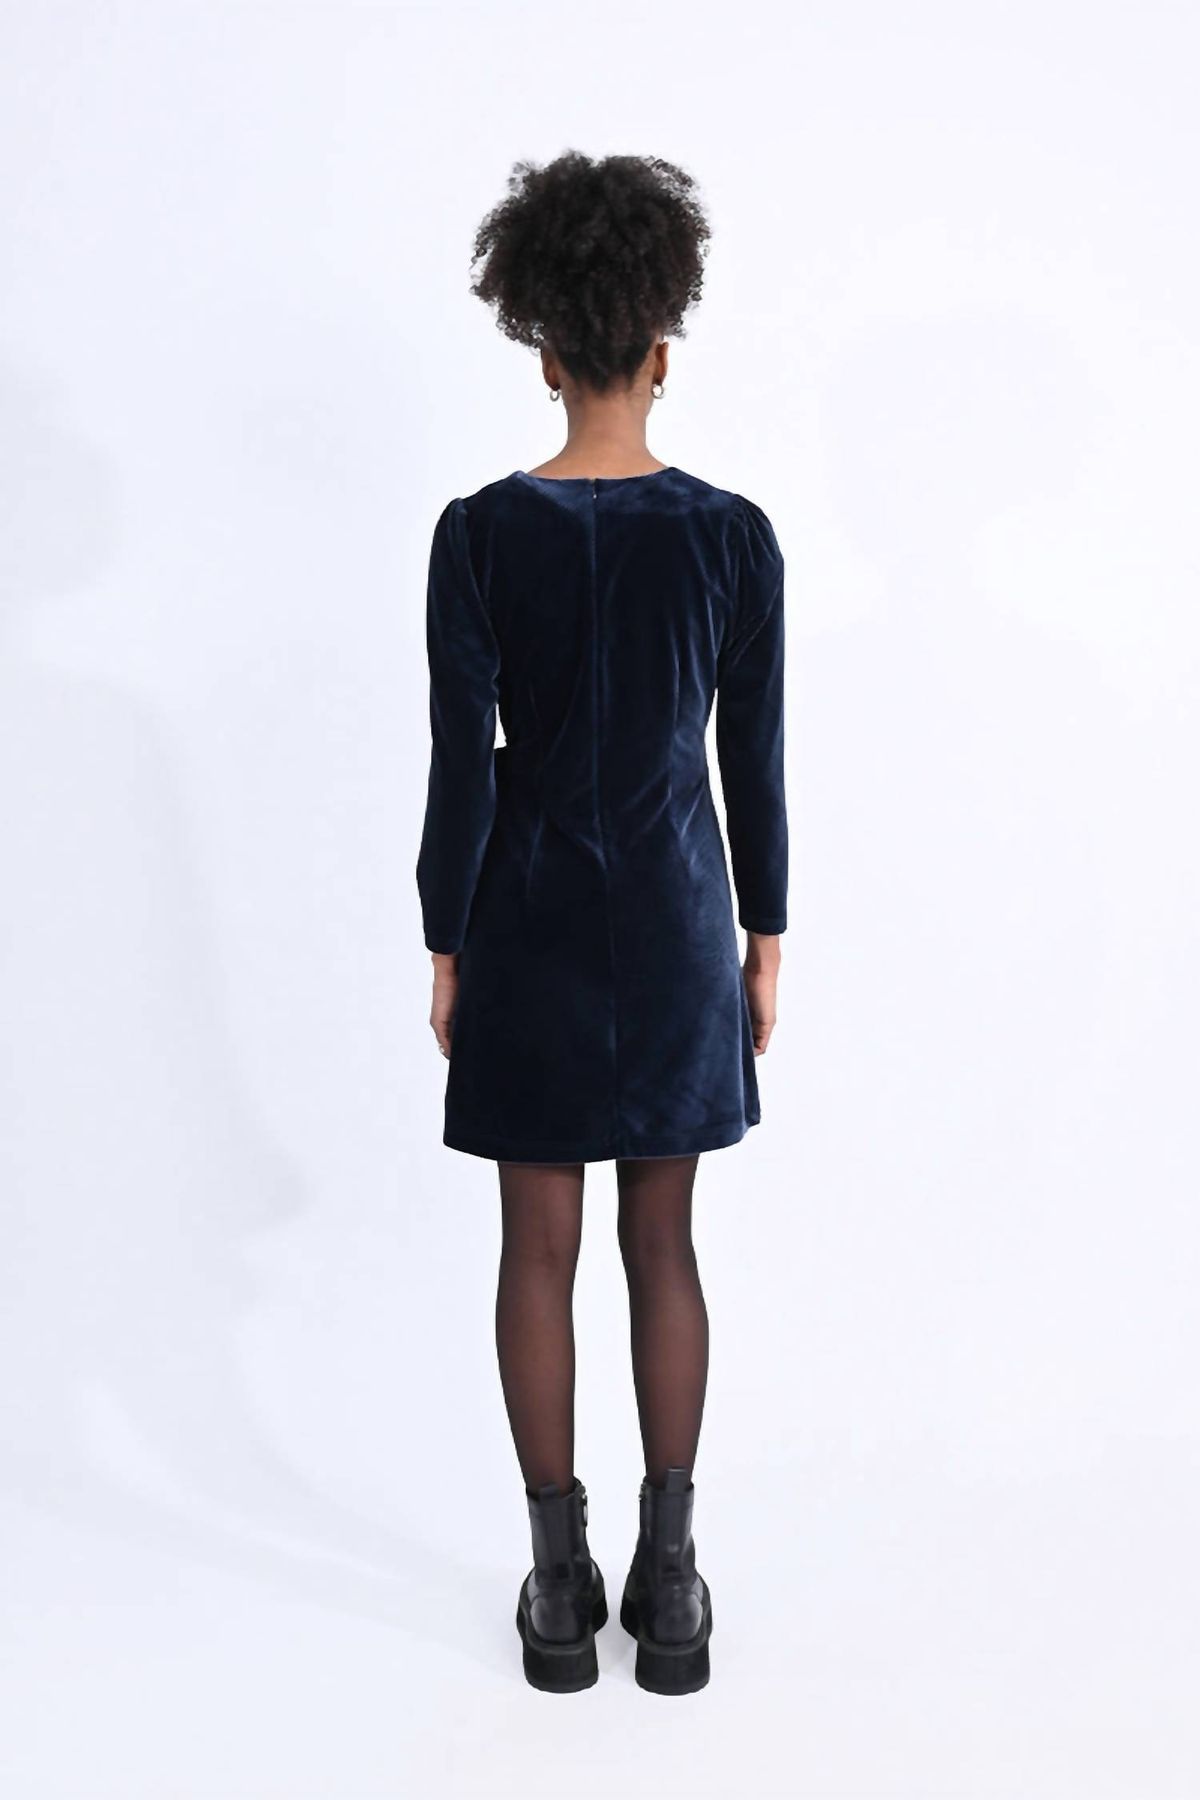 Style 1-4155527860-2901 MOLLY BRACKEN Size M Long Sleeve Velvet Navy Blue Cocktail Dress on Queenly